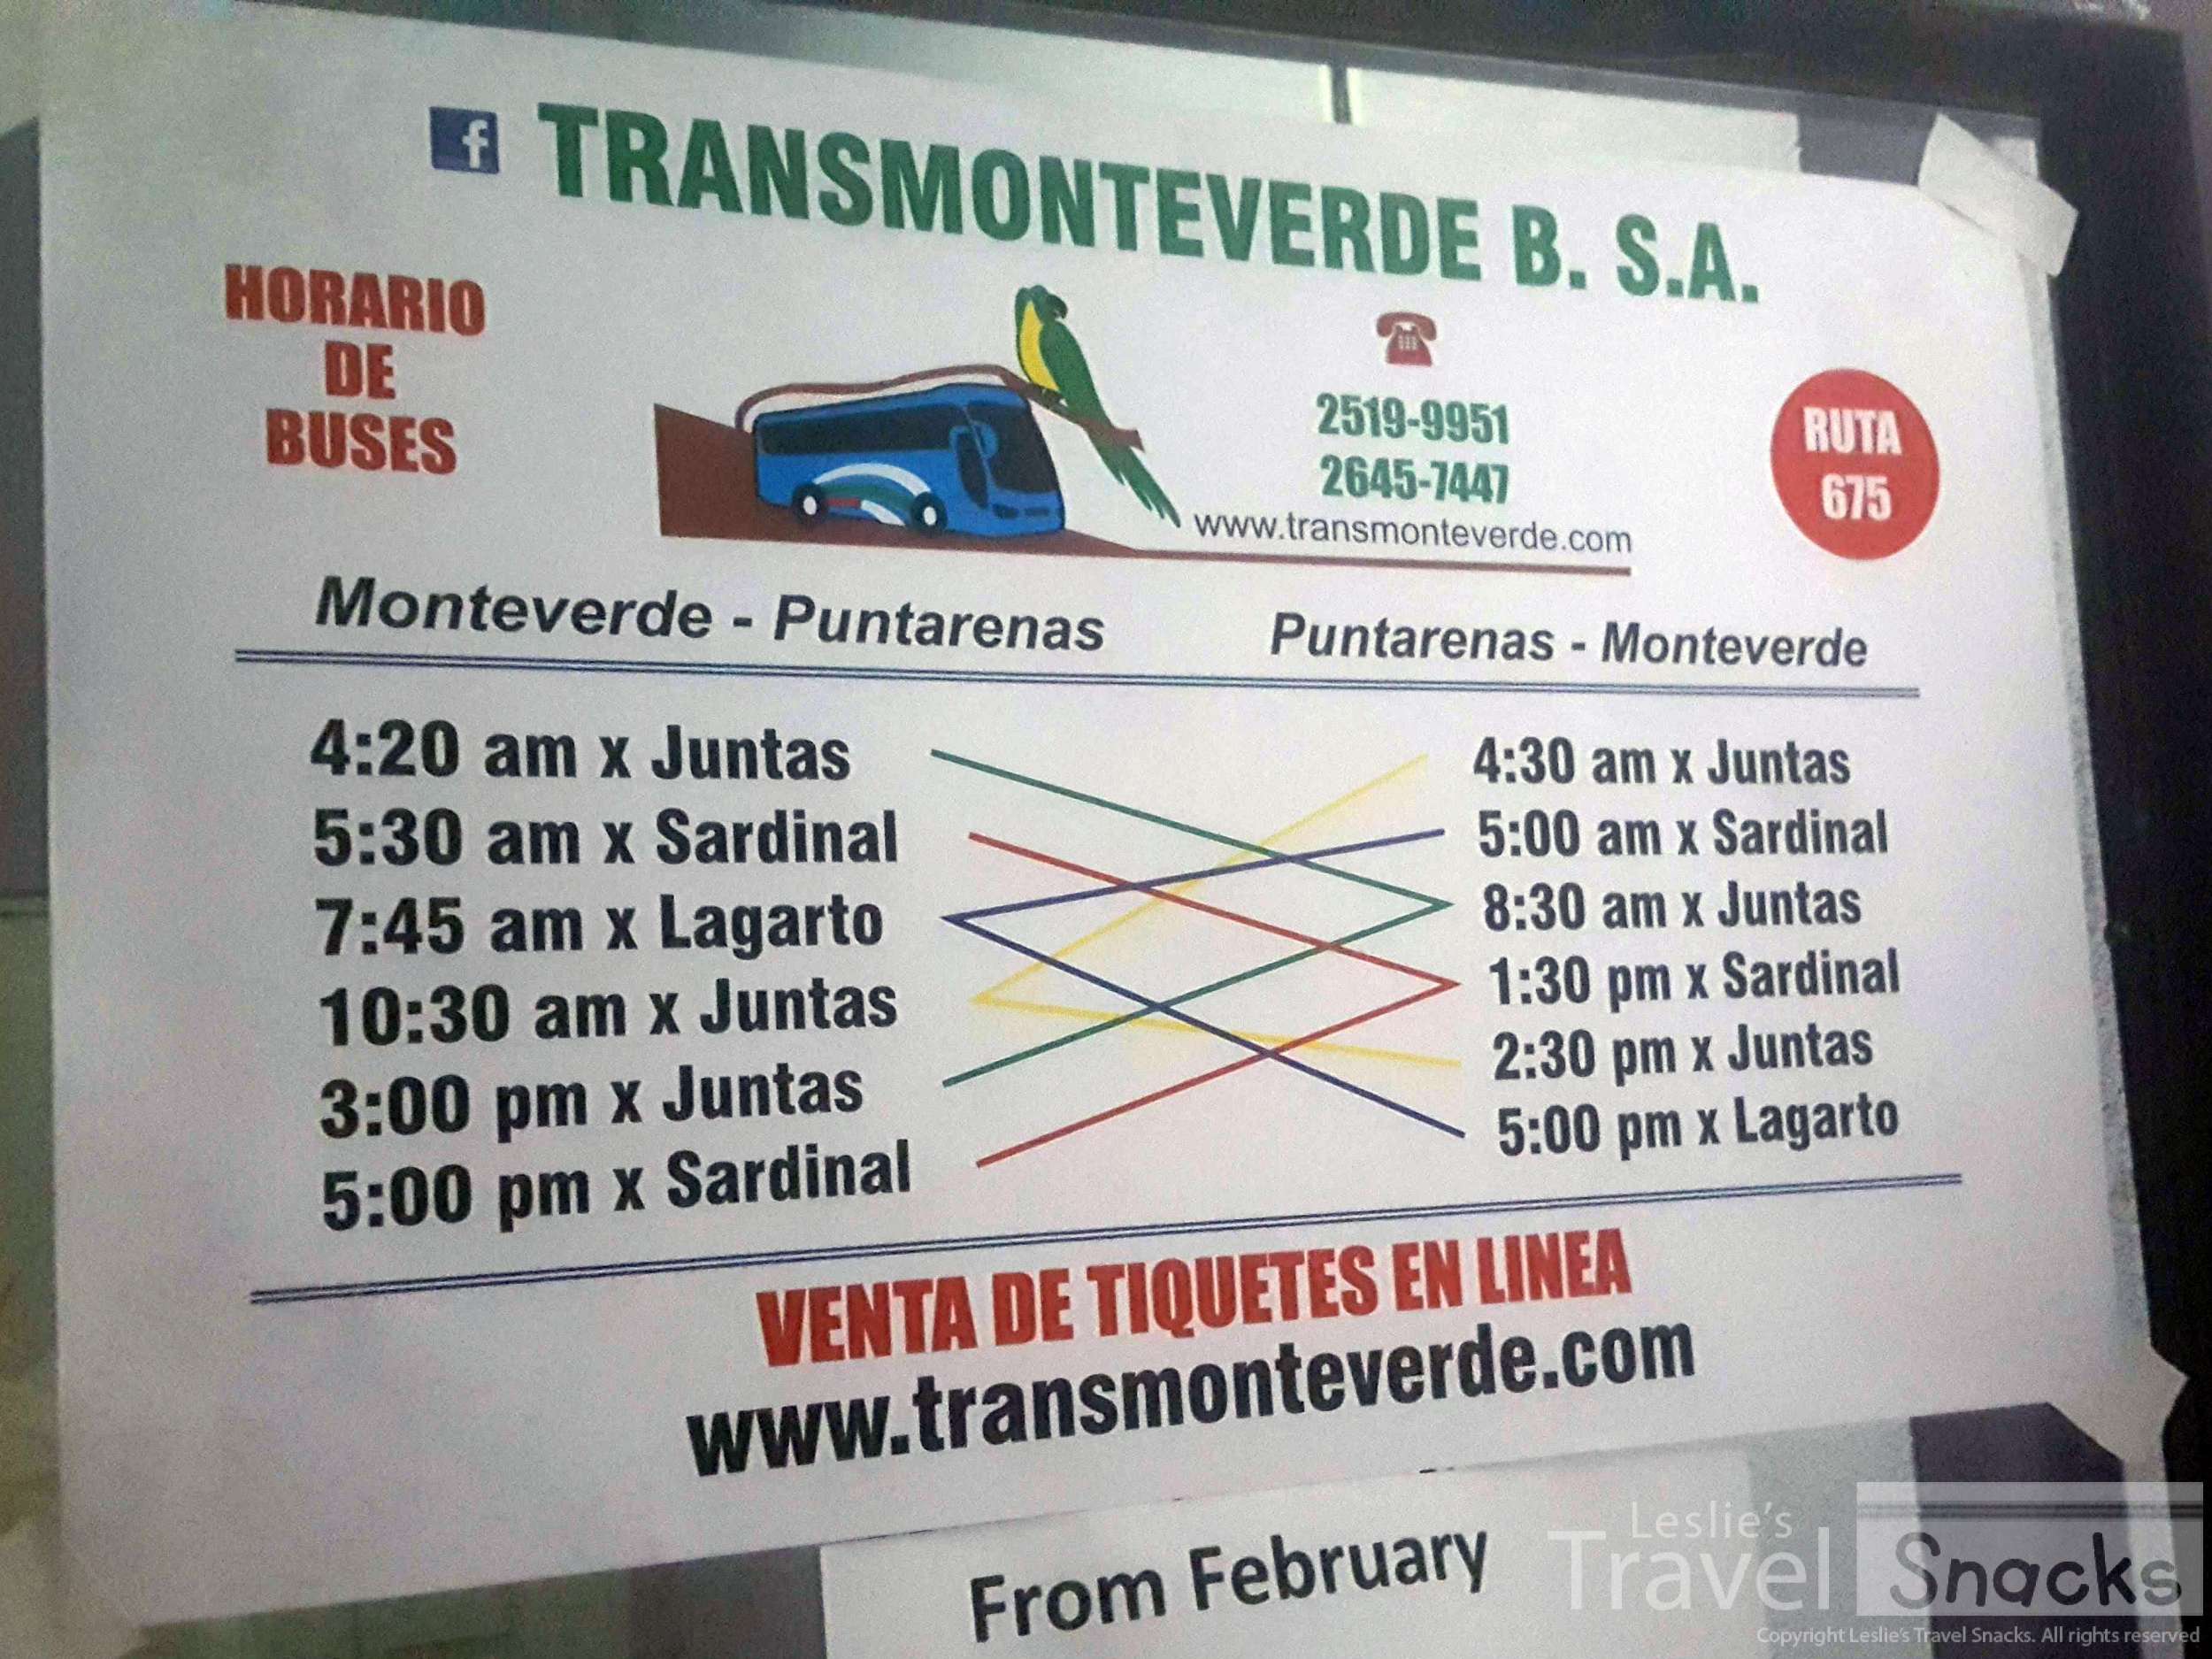 Monteverde to Puntarenas bus schedule at the Transmonteverde ticket office.